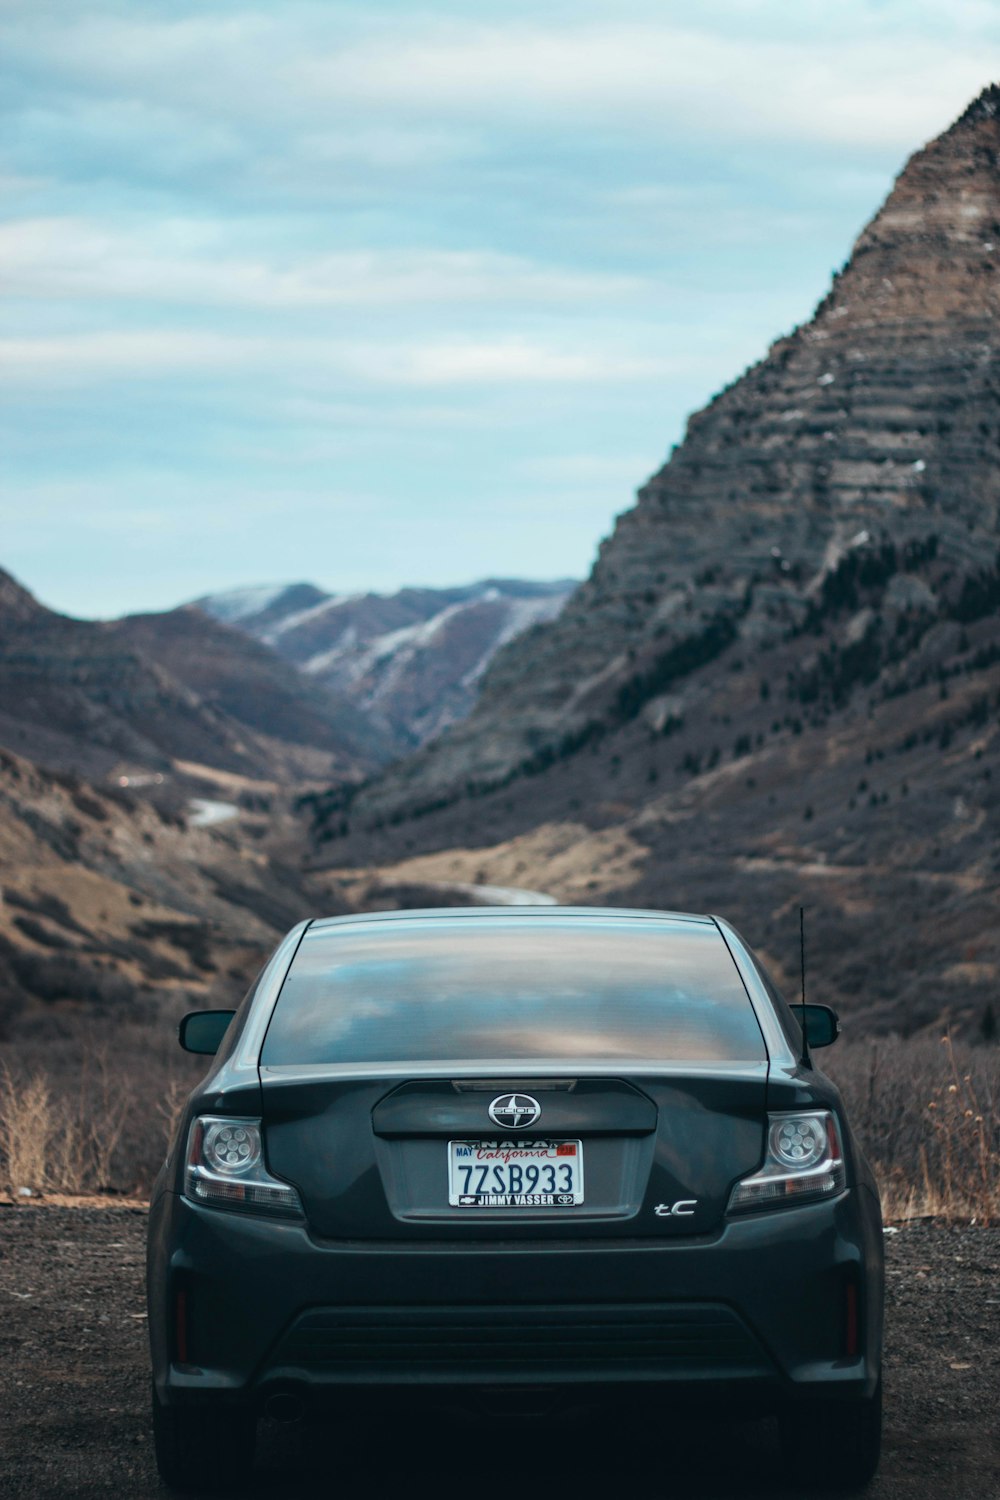 black Scion car parked near mountain range